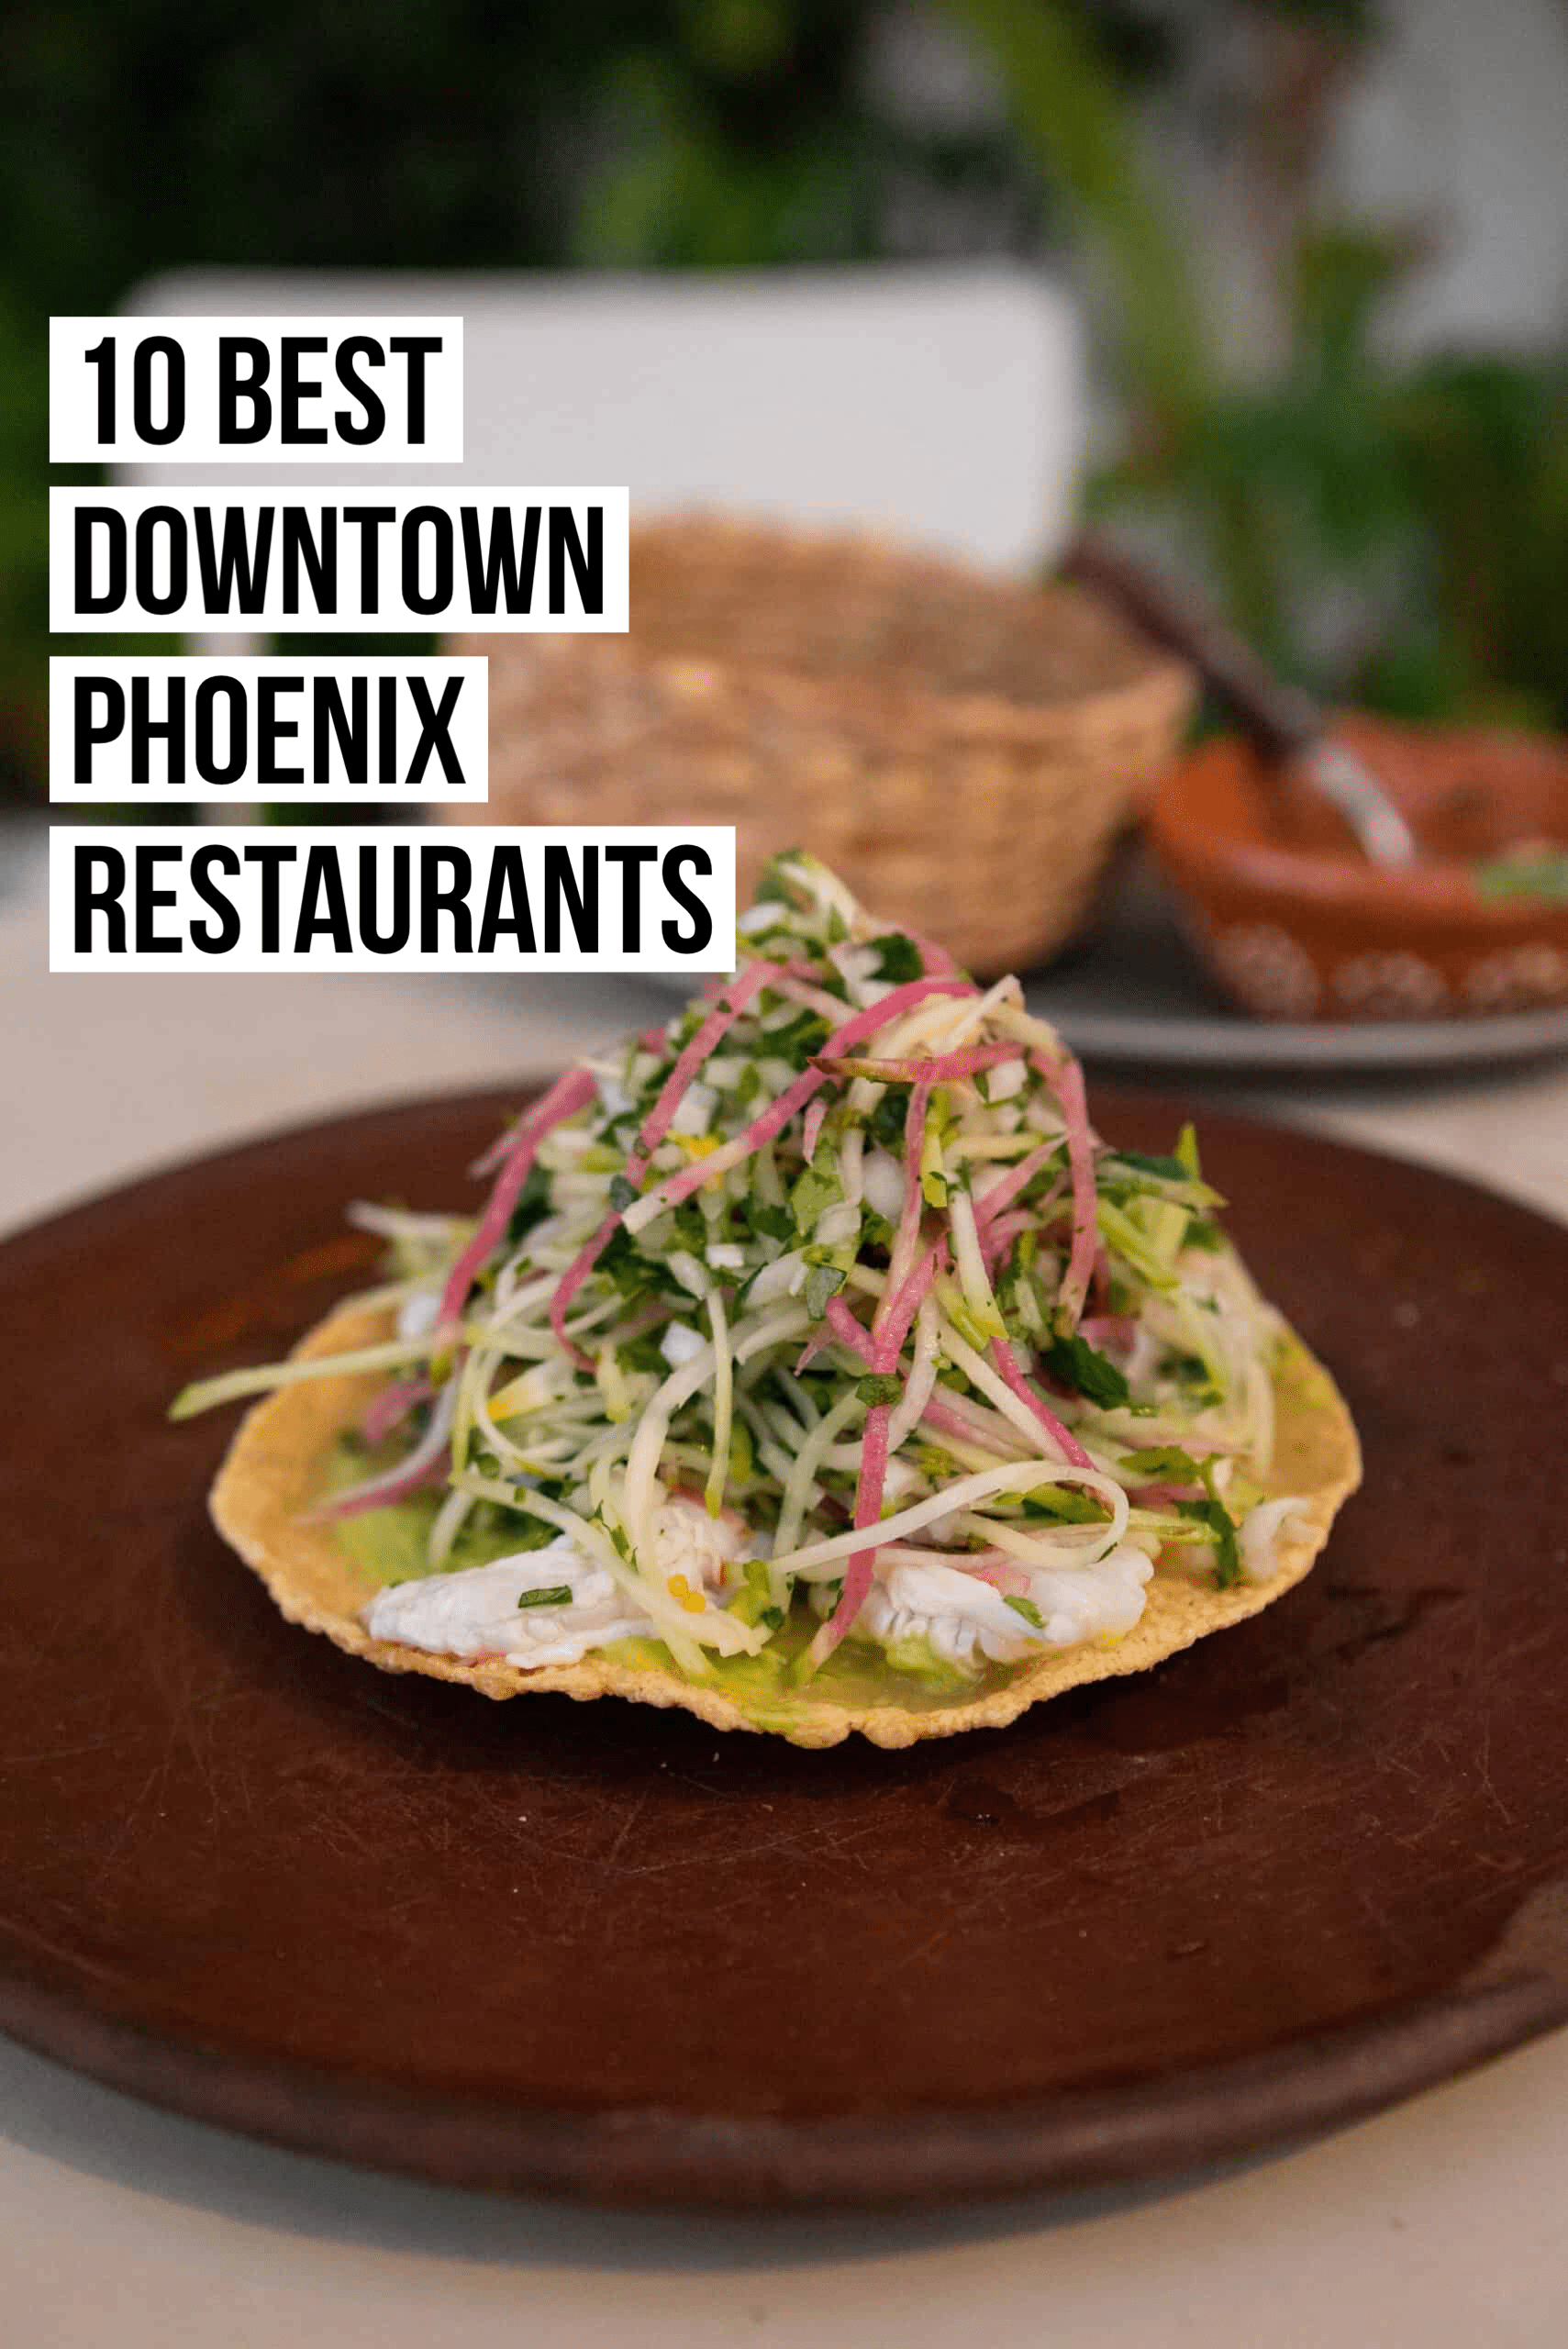 10 Best Downtown Phoenix Restaurants